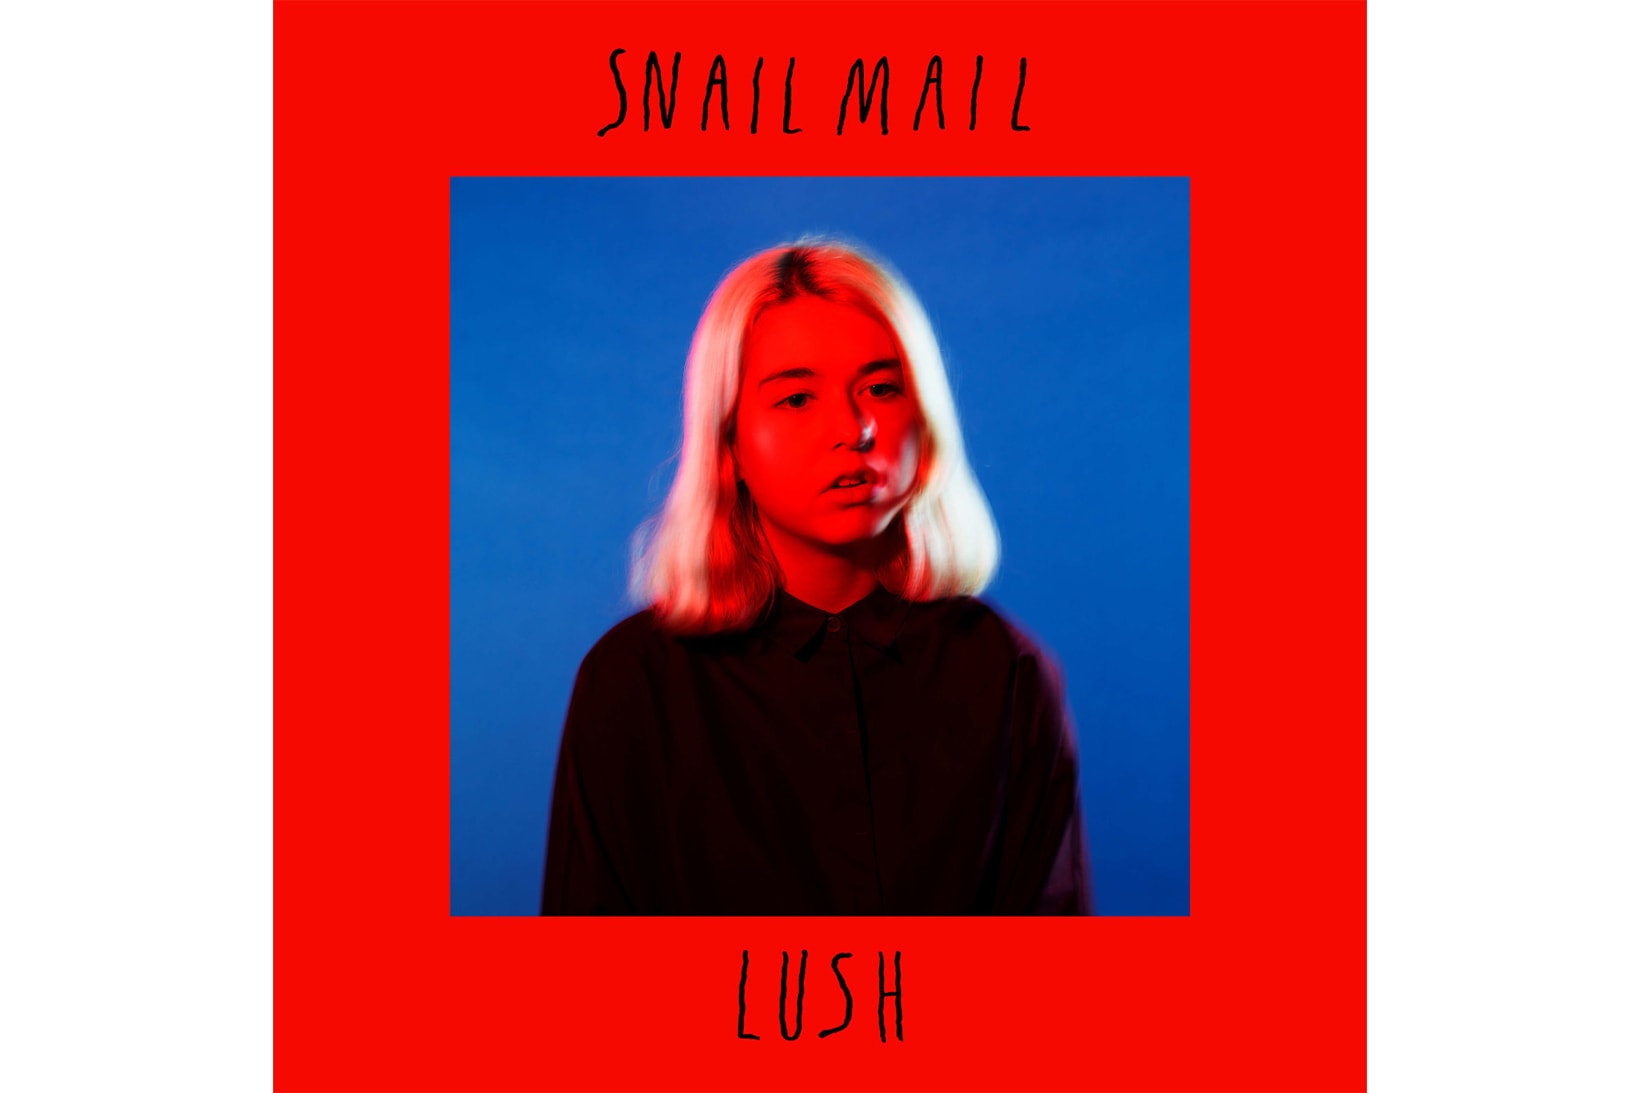 Snail Mail Lush Album Stream june 8 2018 release date info drop debut premiere spotify